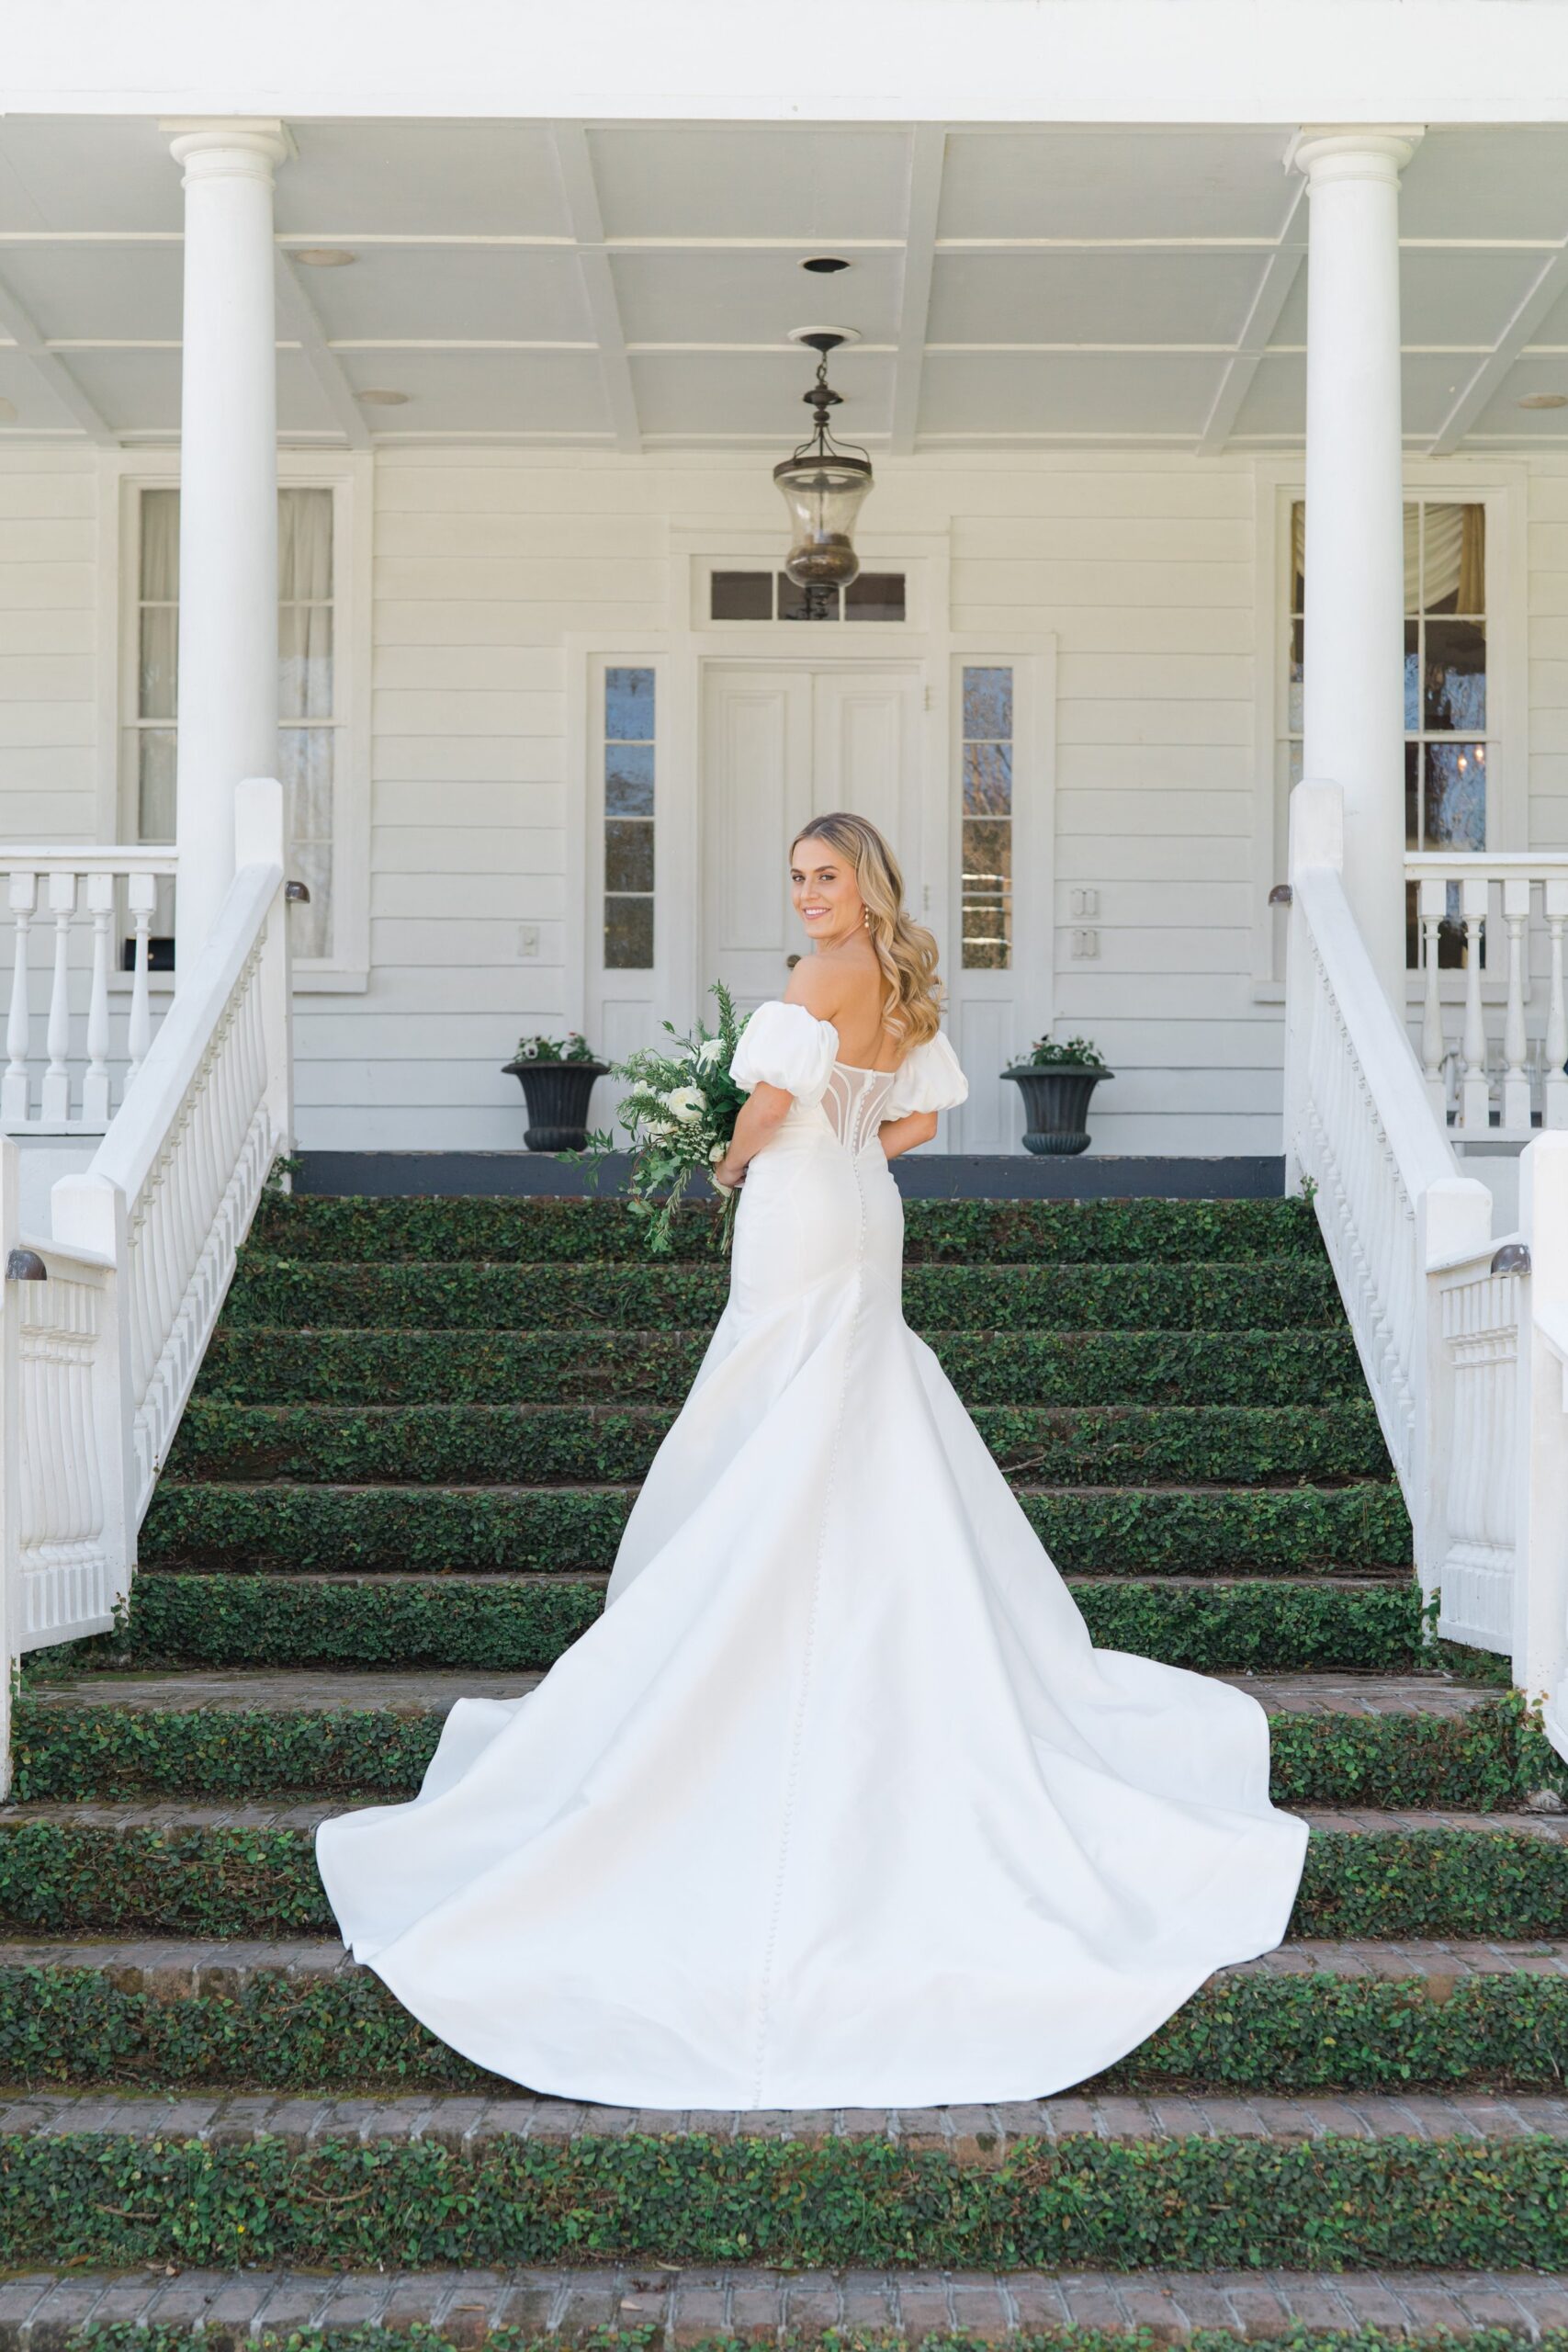 Perfect Charleston Spring Bride. Old Wide Awake. East Coast Outdoor Destination Wedding Photographer